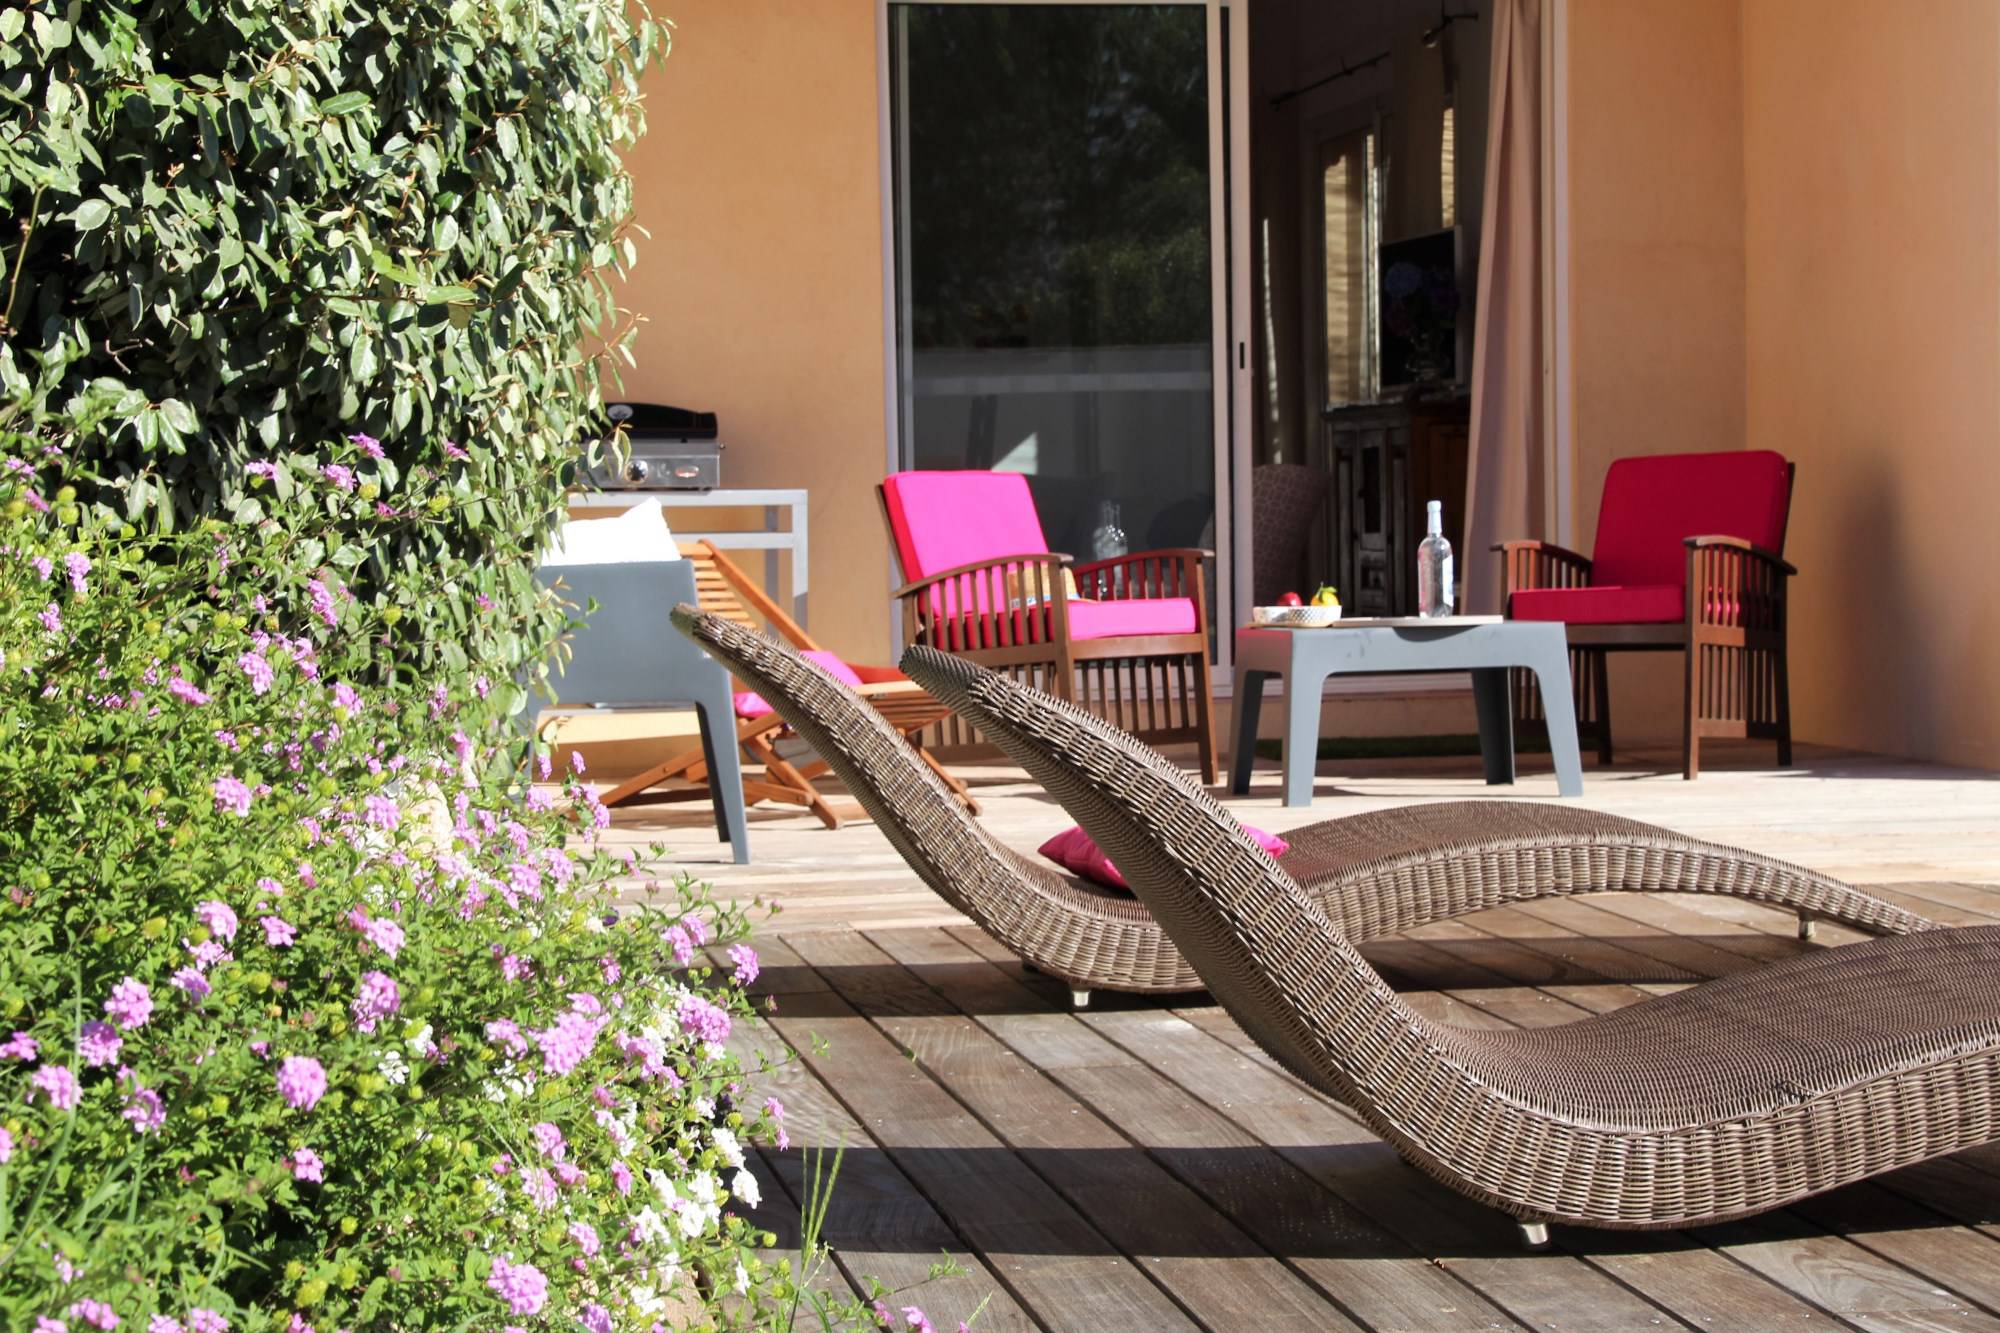 Corse location de vacances villa Calita terrasse aménagée